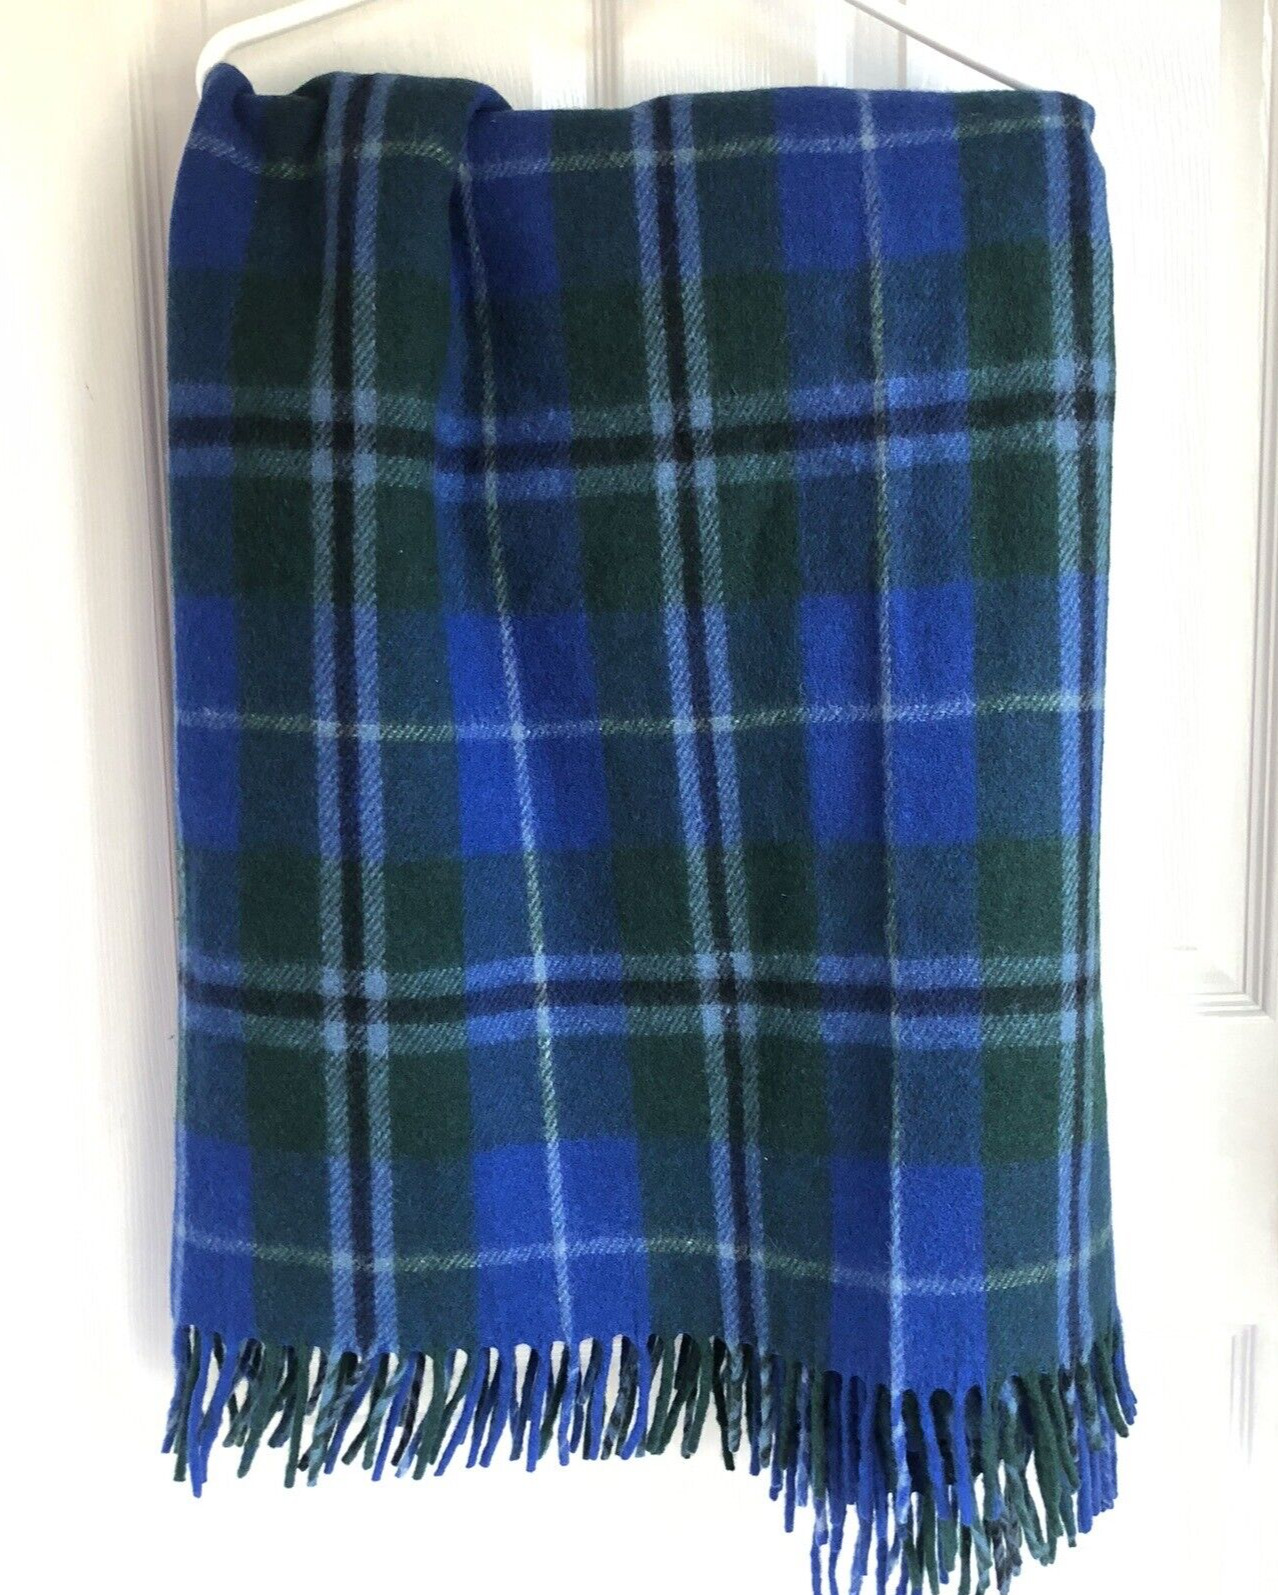 NEW Large Scotland Highland Wool Blanket Throw by Tartan Tweeds  72\